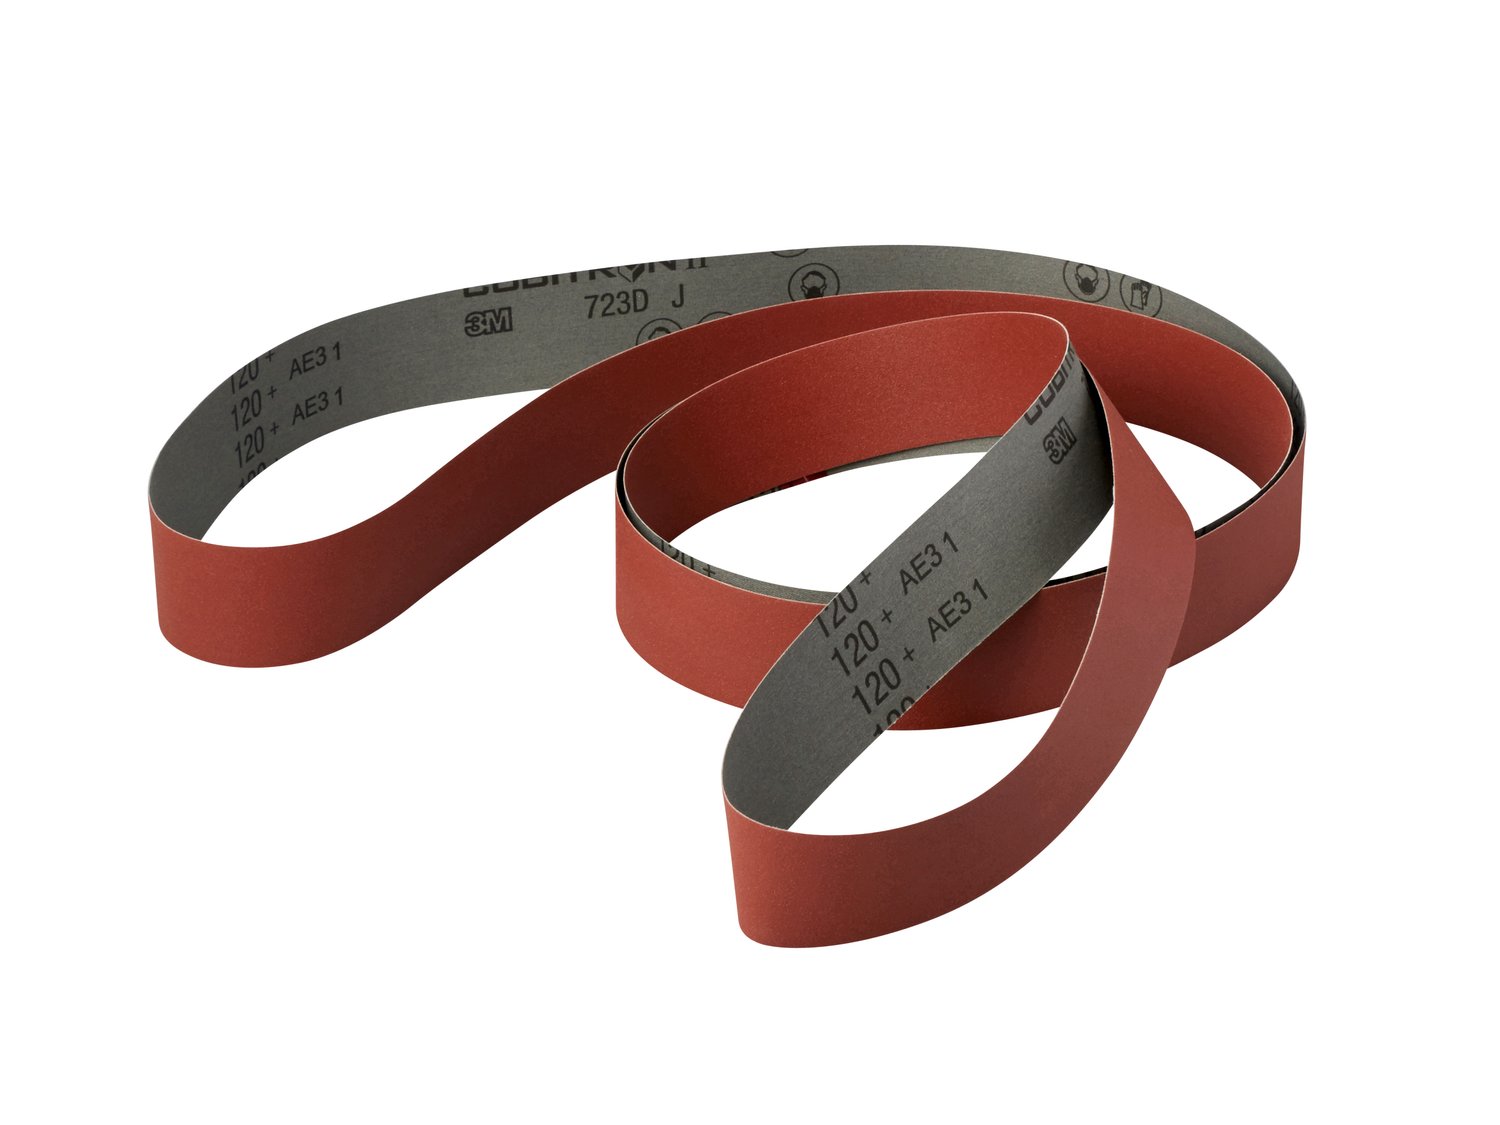 7010514807 - 3M Cubitron ll Cloth Belt 723D, 180+ J-weight, 2 in x 72 in, Film-lok,
Full-flex